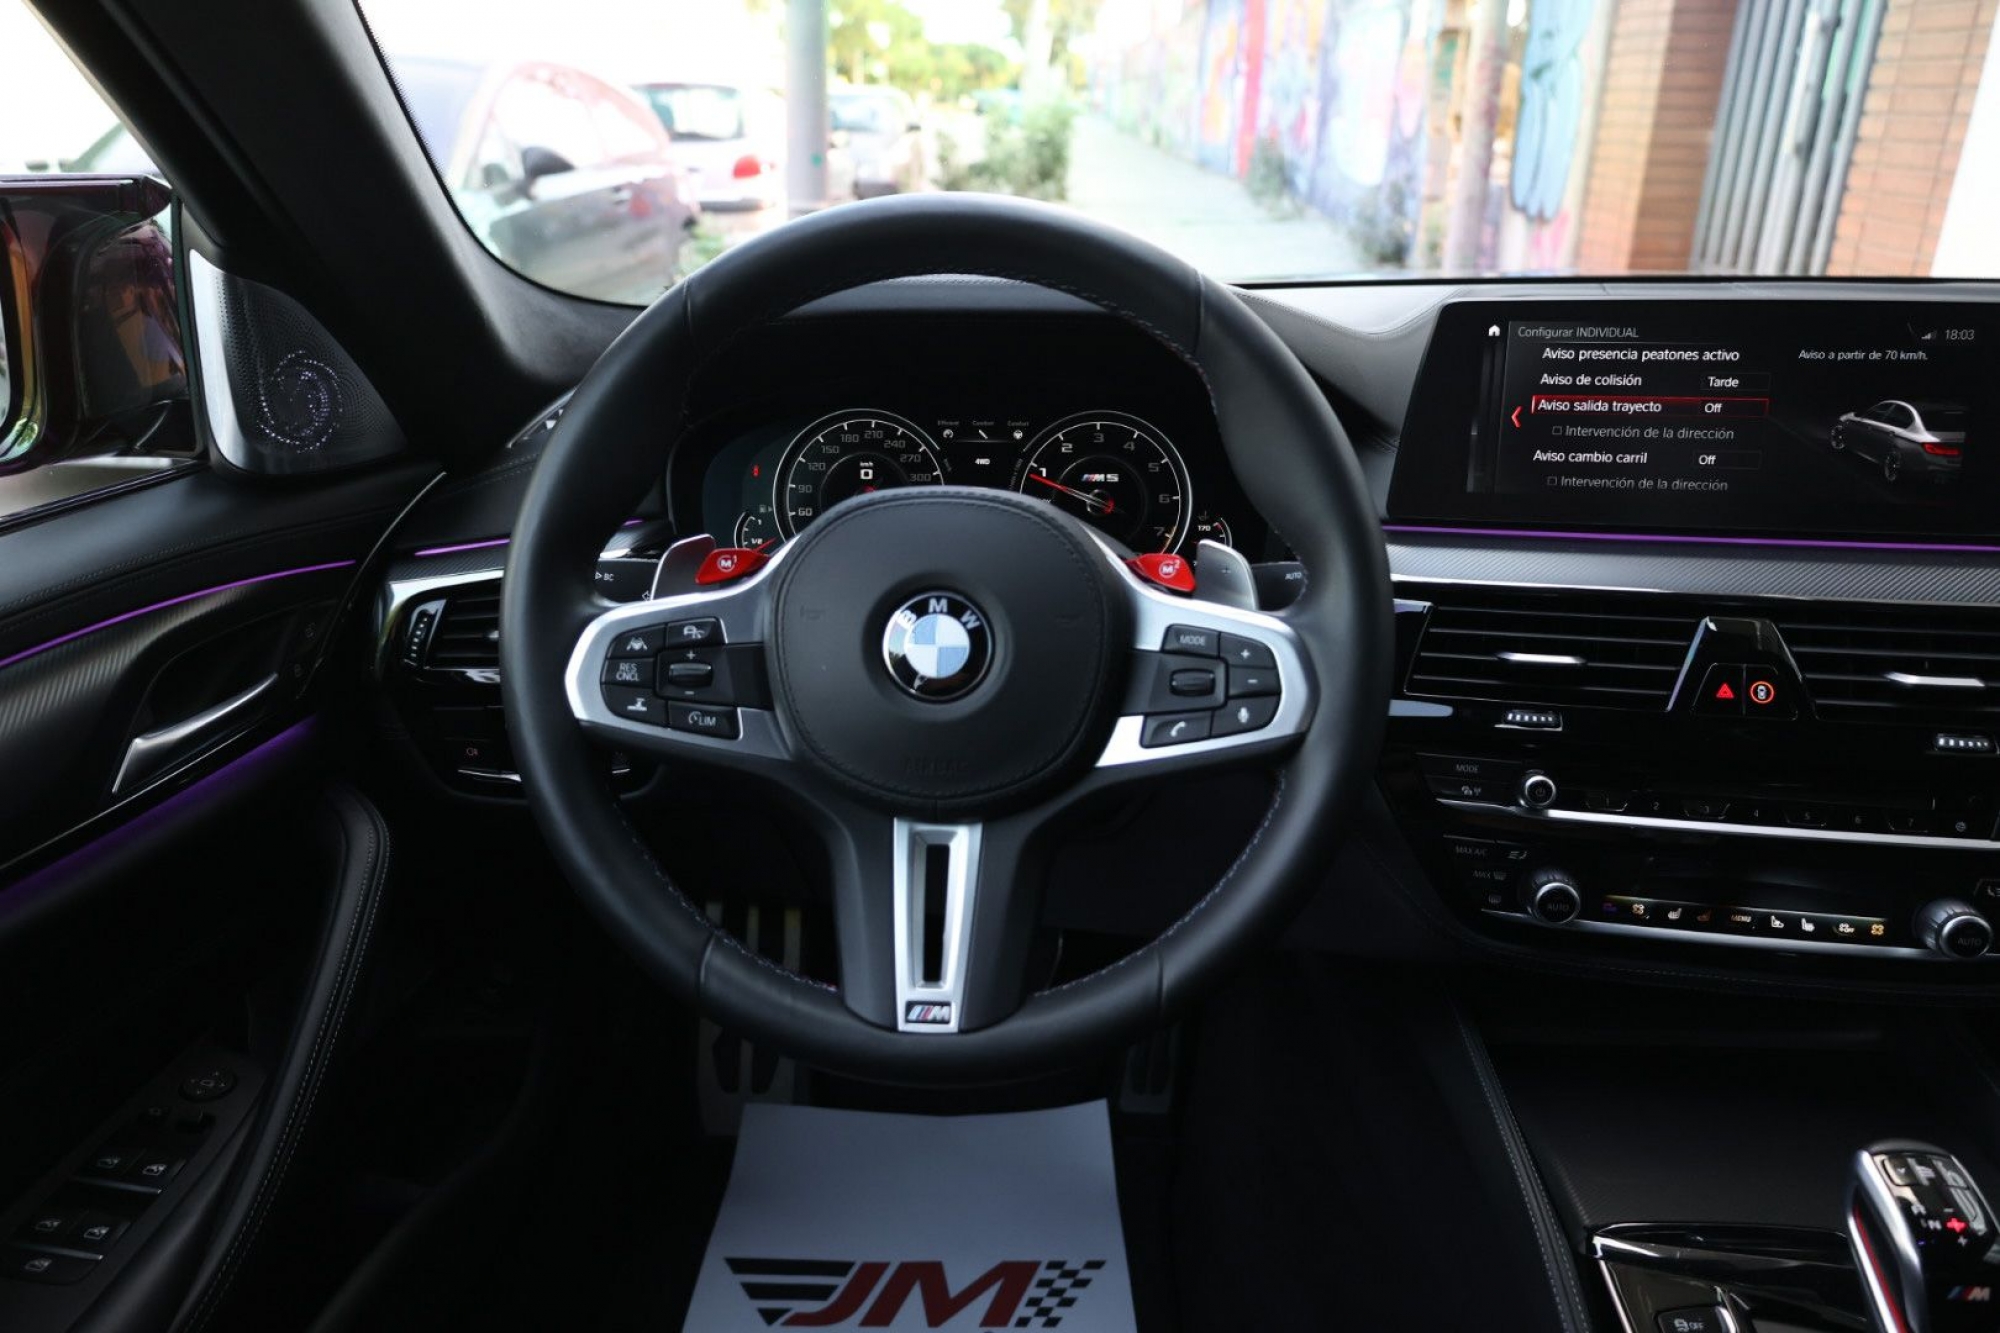 BMW M5 COMPETITION AUT. -NACIONAL, IVA DEDUCIBLE-